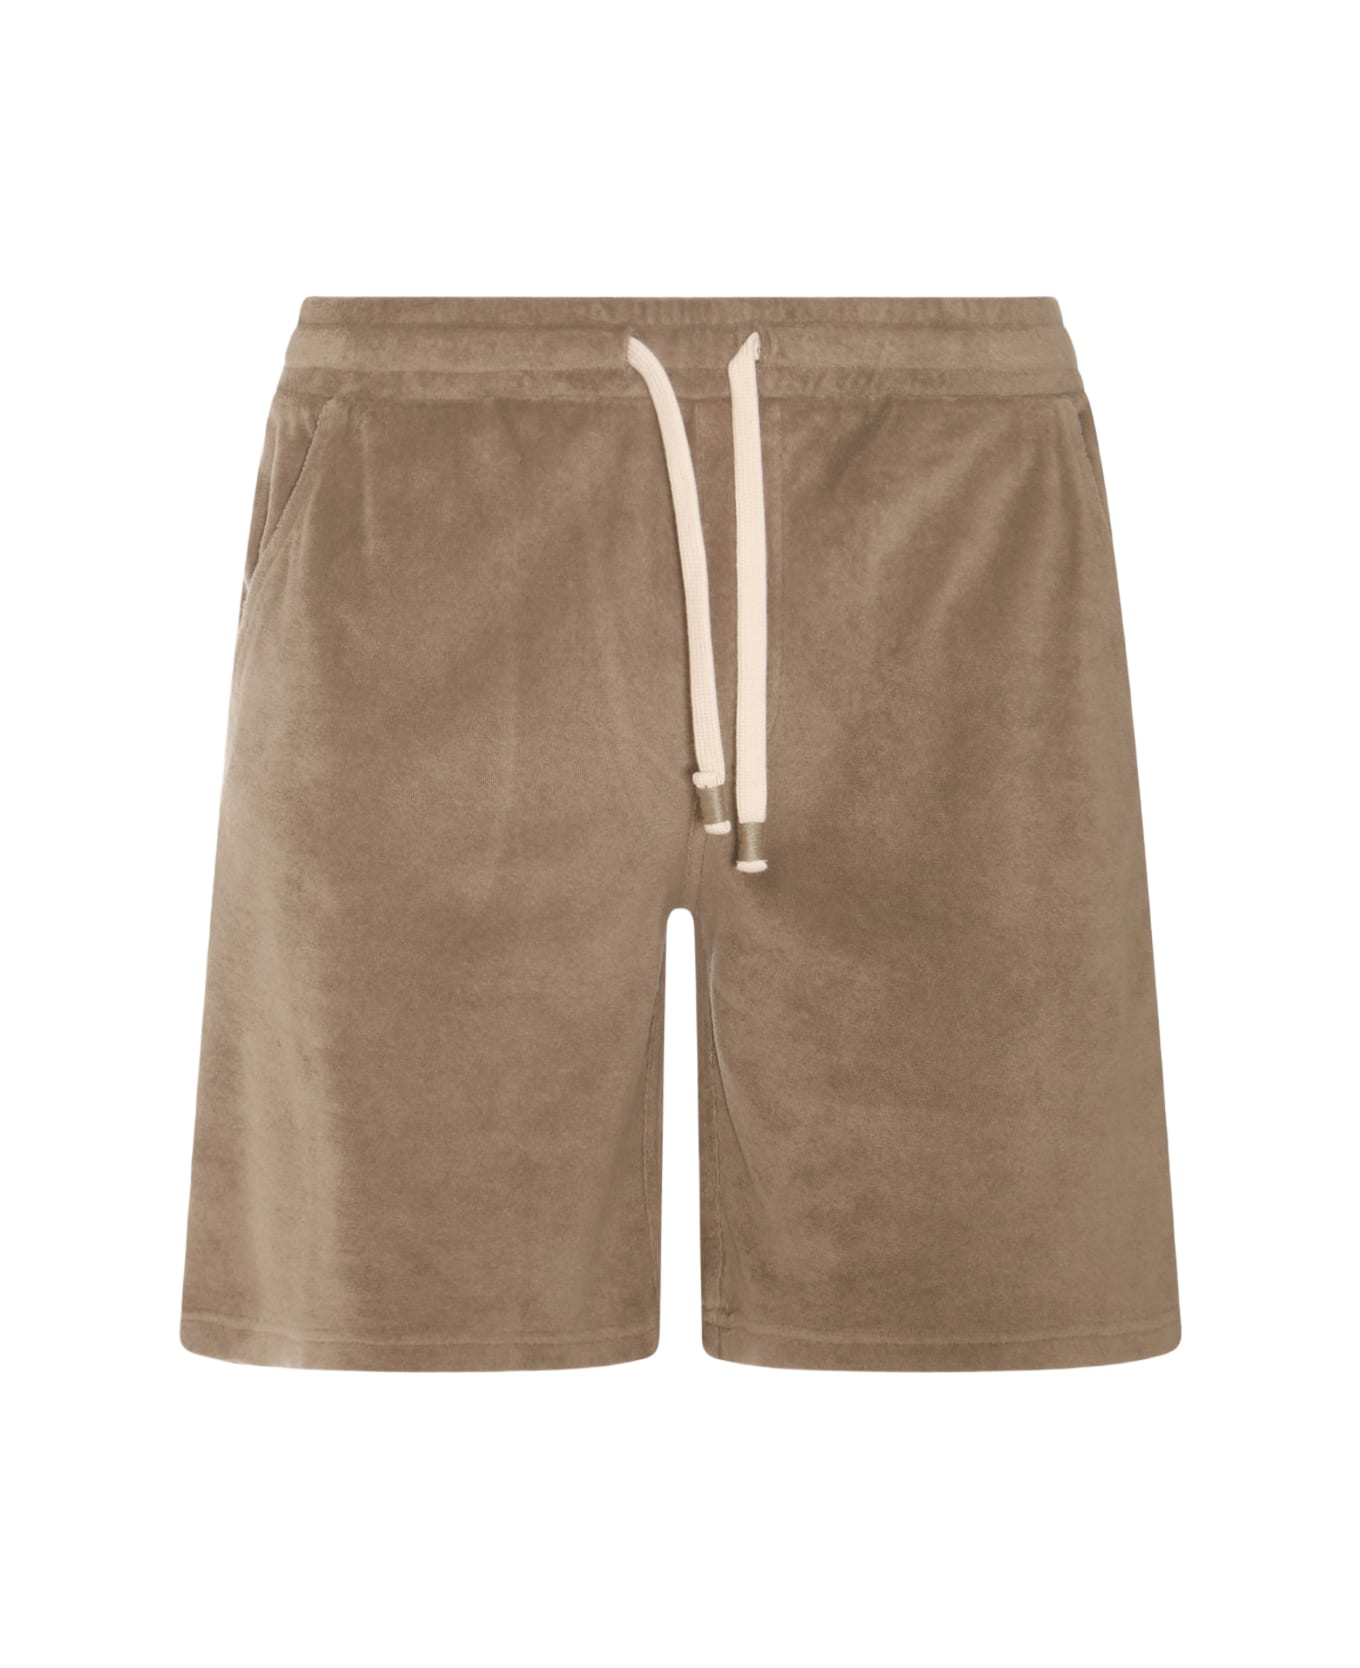 Altea Army Cotton Shorts - Army